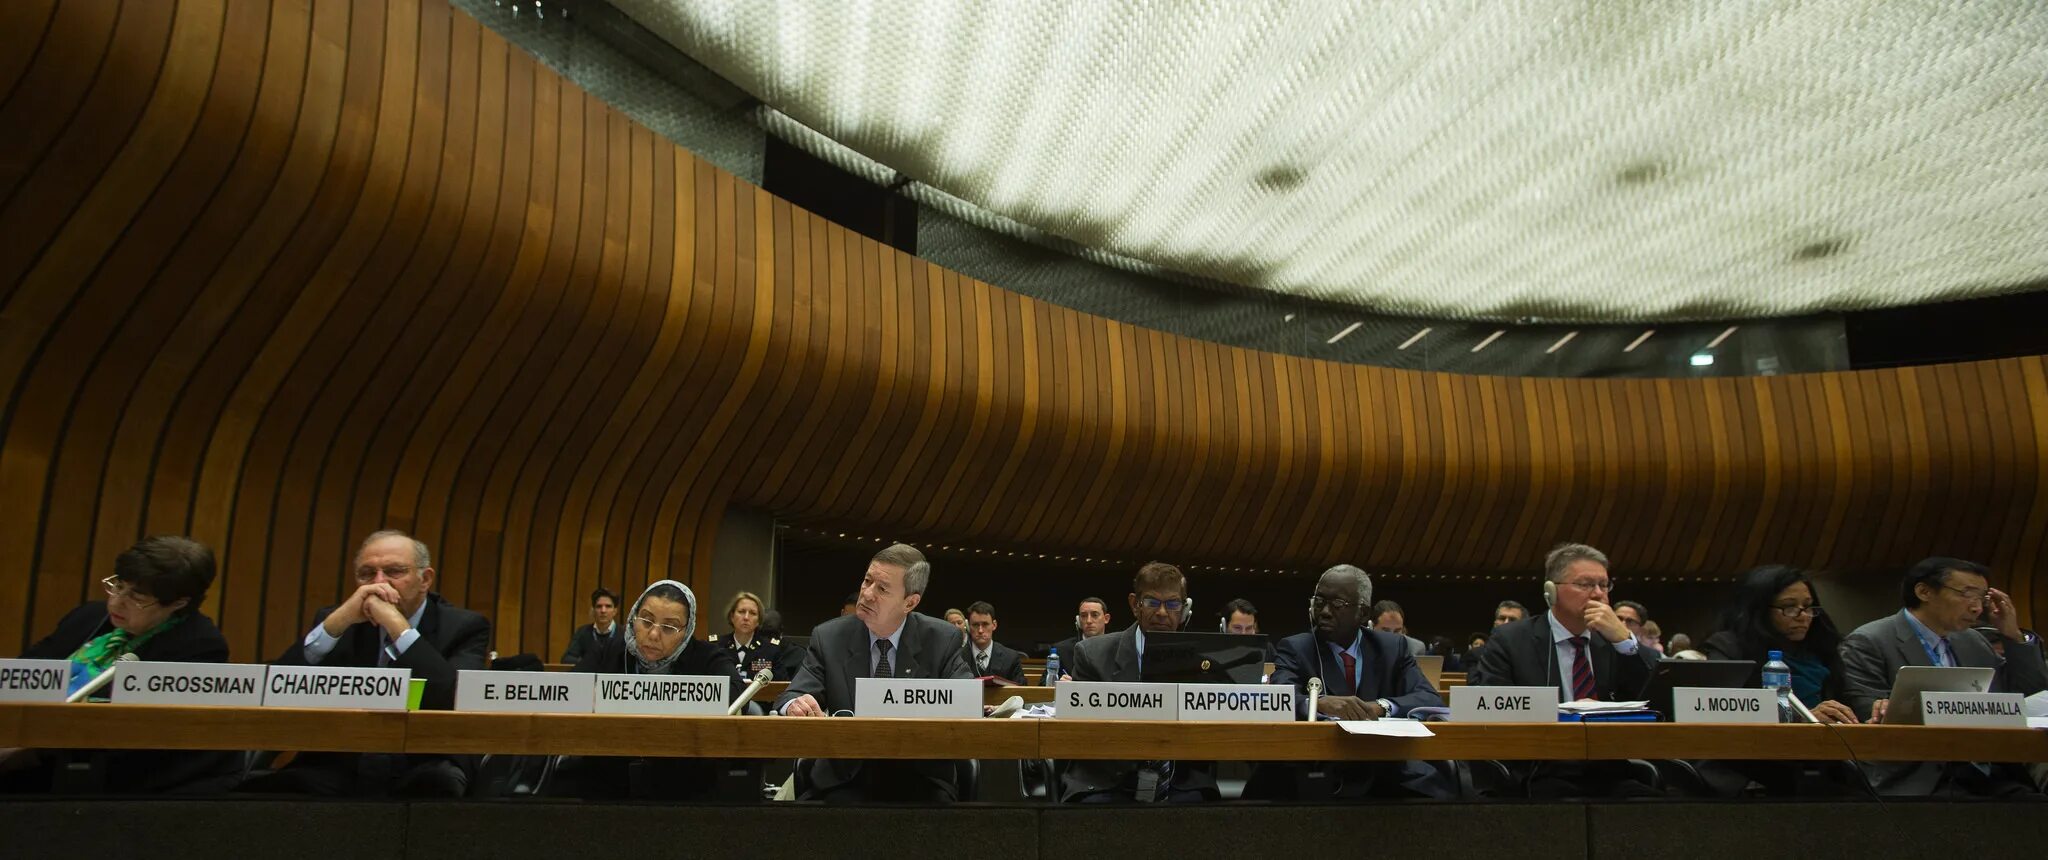 Комитет против пыток ООН. Комитеты ООН. Комитет против пыток ООН эмблема. Комитет против пыток ООН заседание.